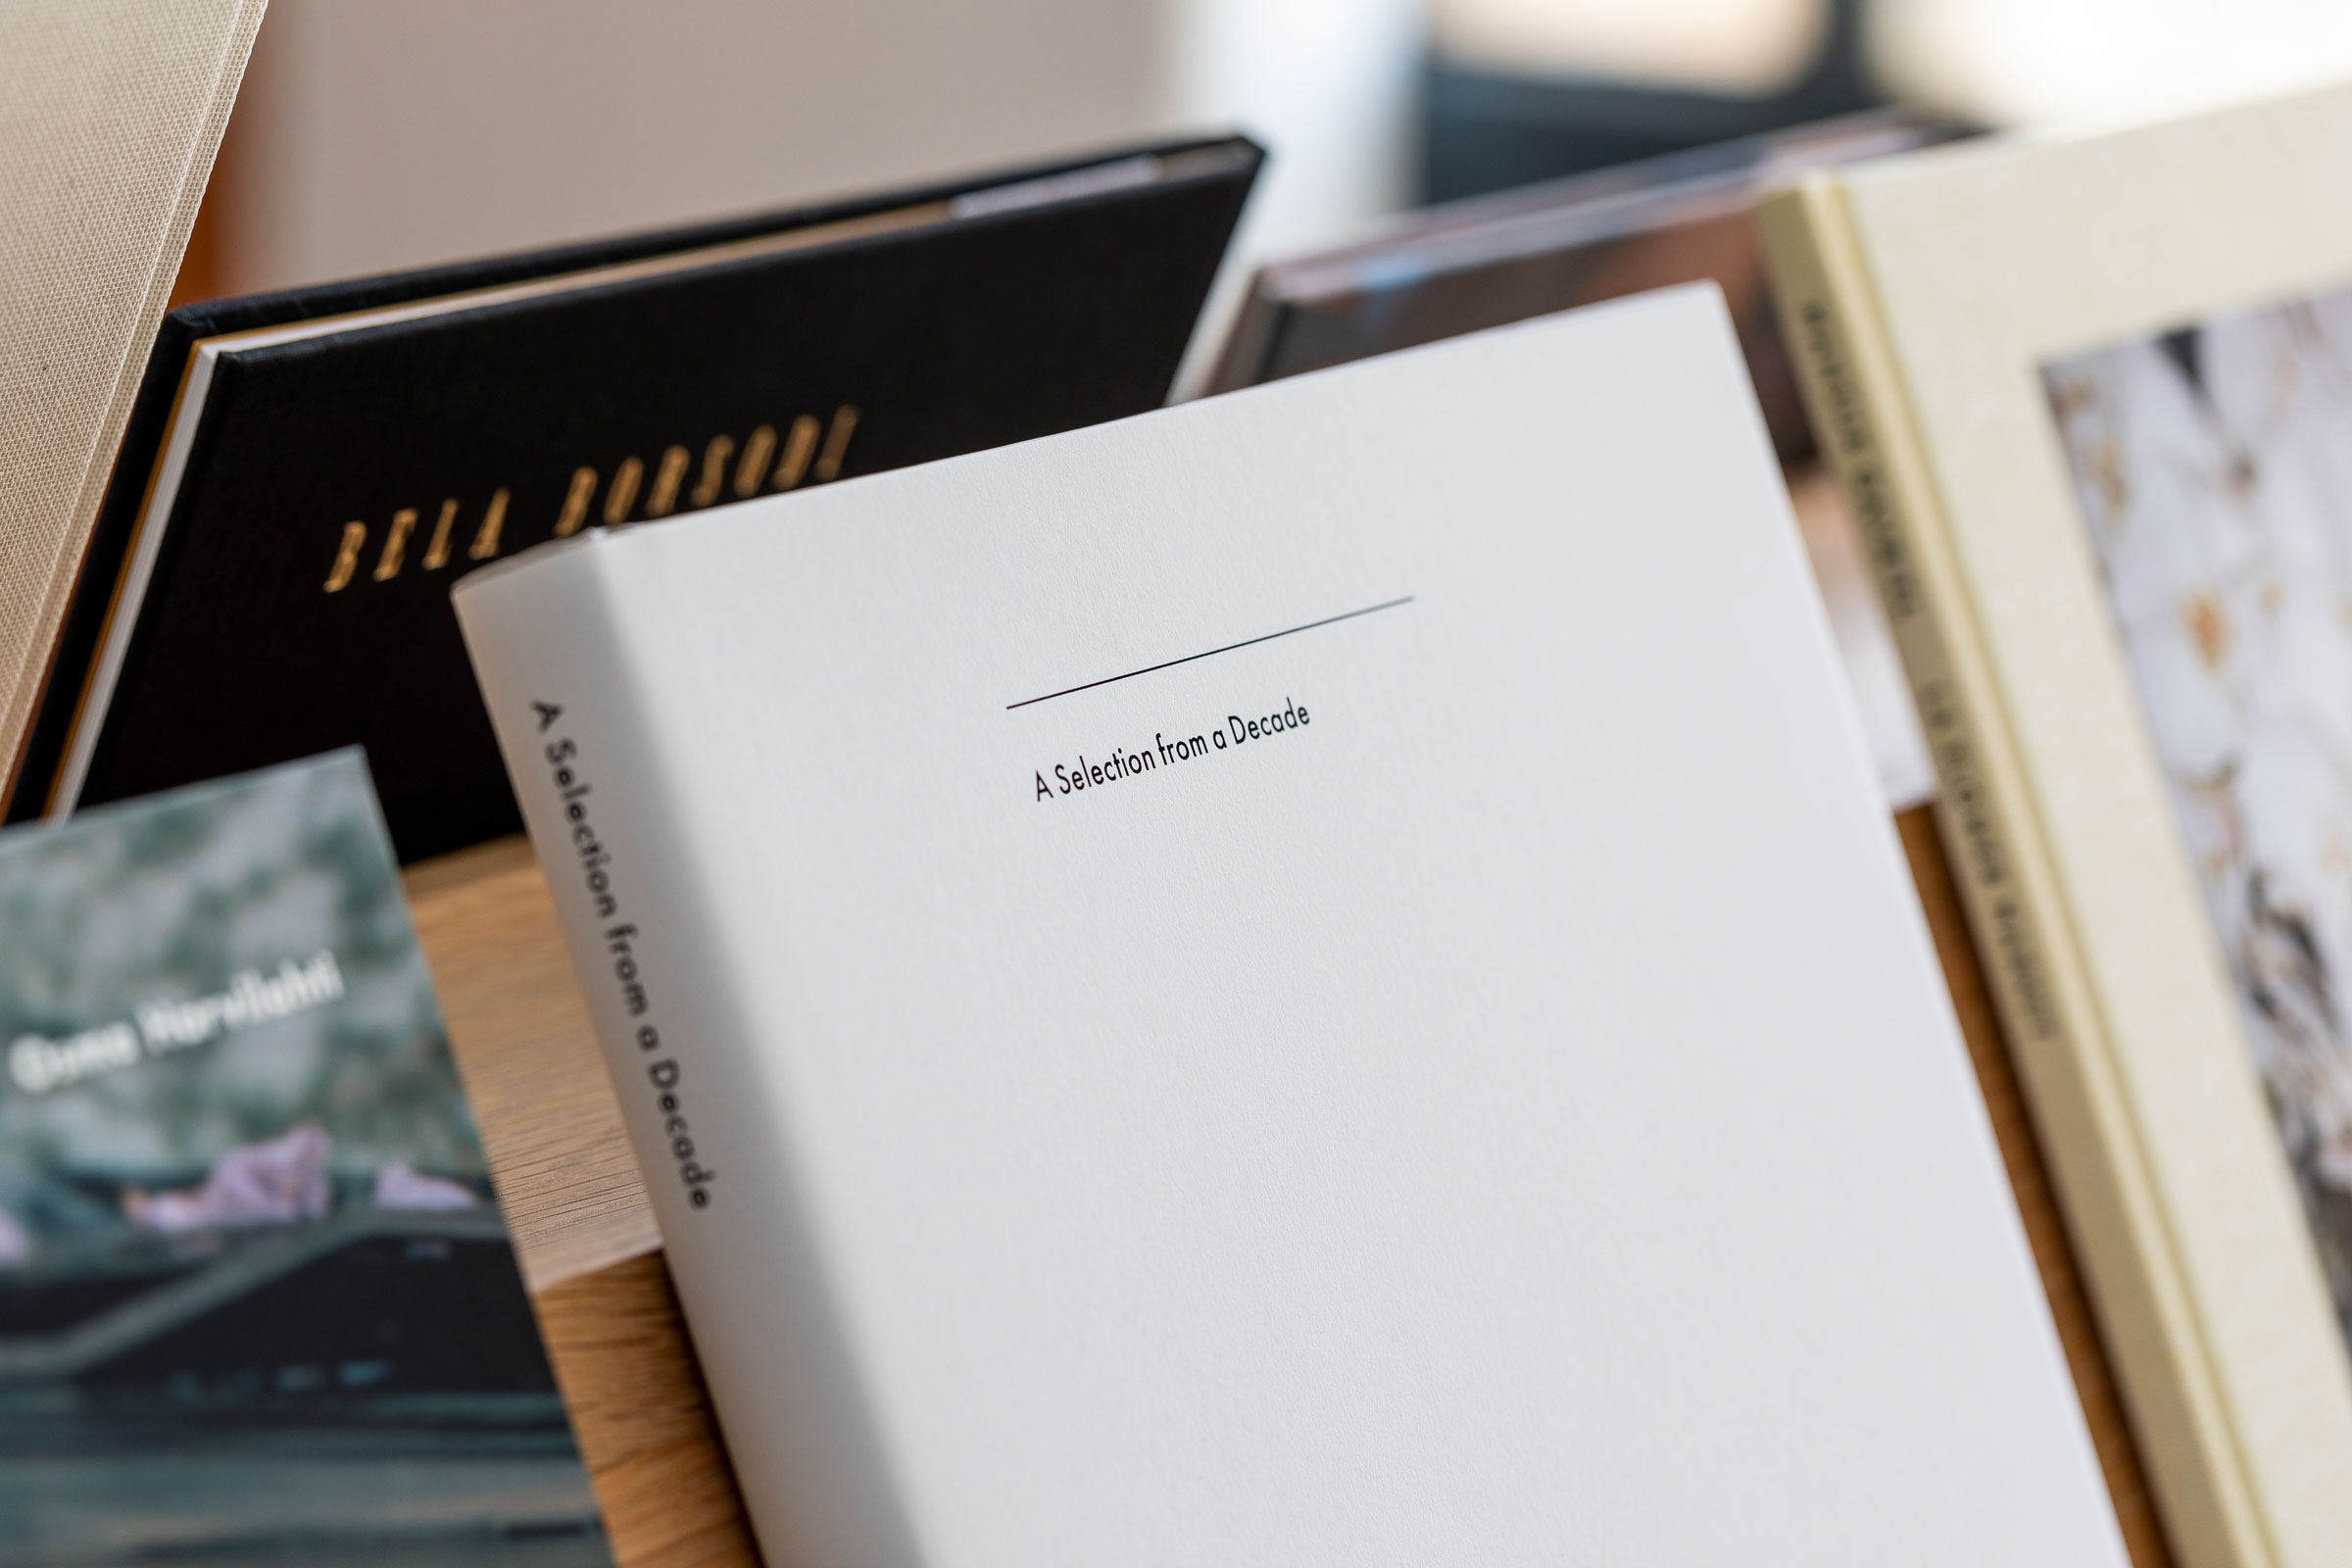 ReadingRoom — Libraryman: A Selection from a Decade — Exhibition